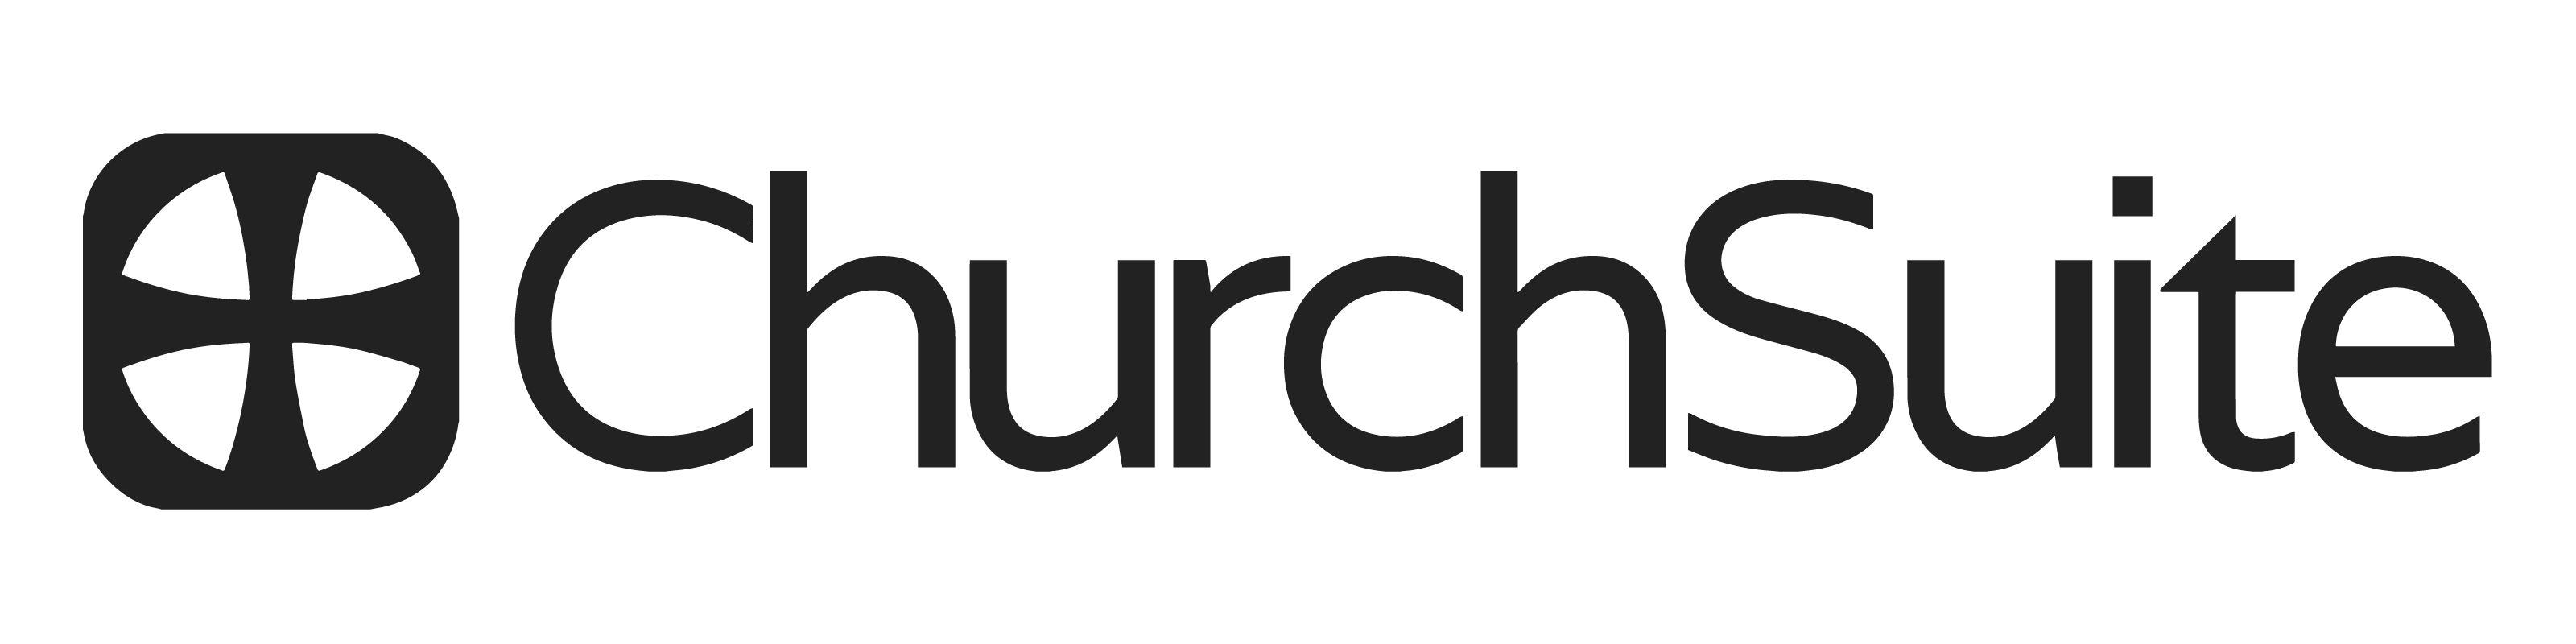 White Church Logo - Church Database System - ChurchSuite Logos & Branding